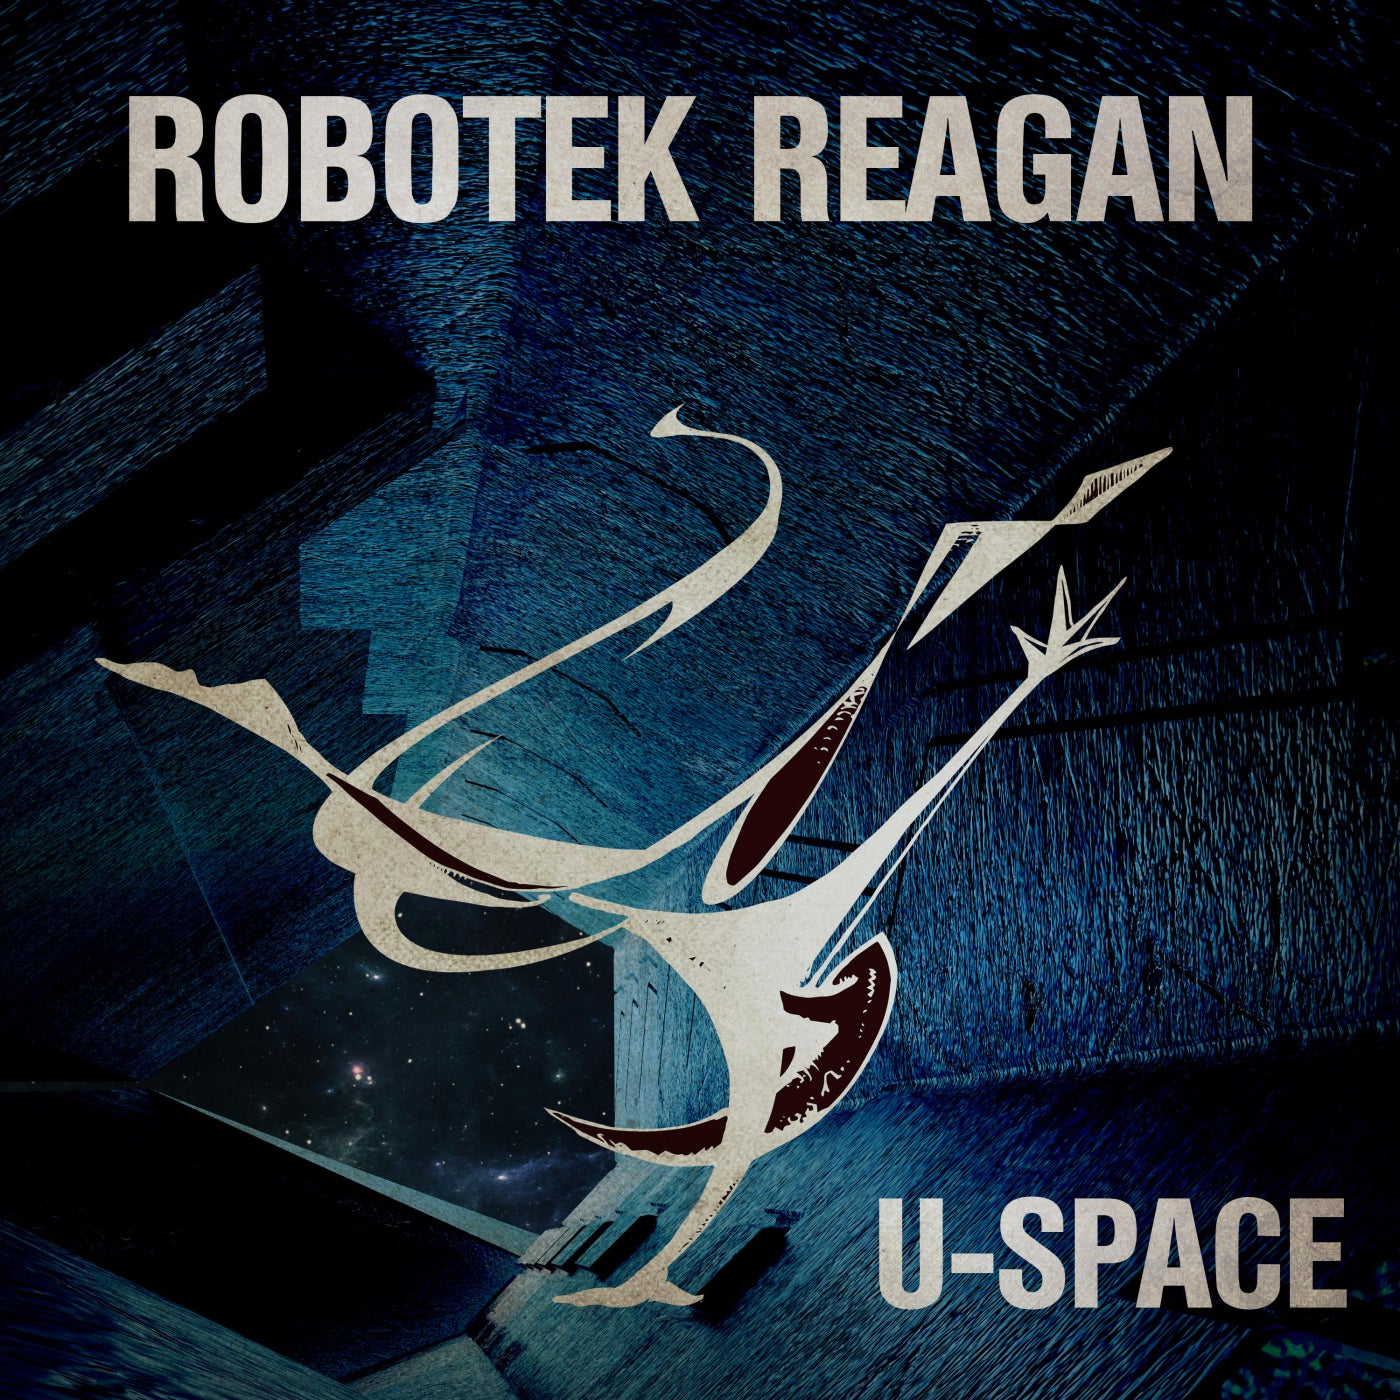 image cover: Robotek Reagan - U-Space / ABD003